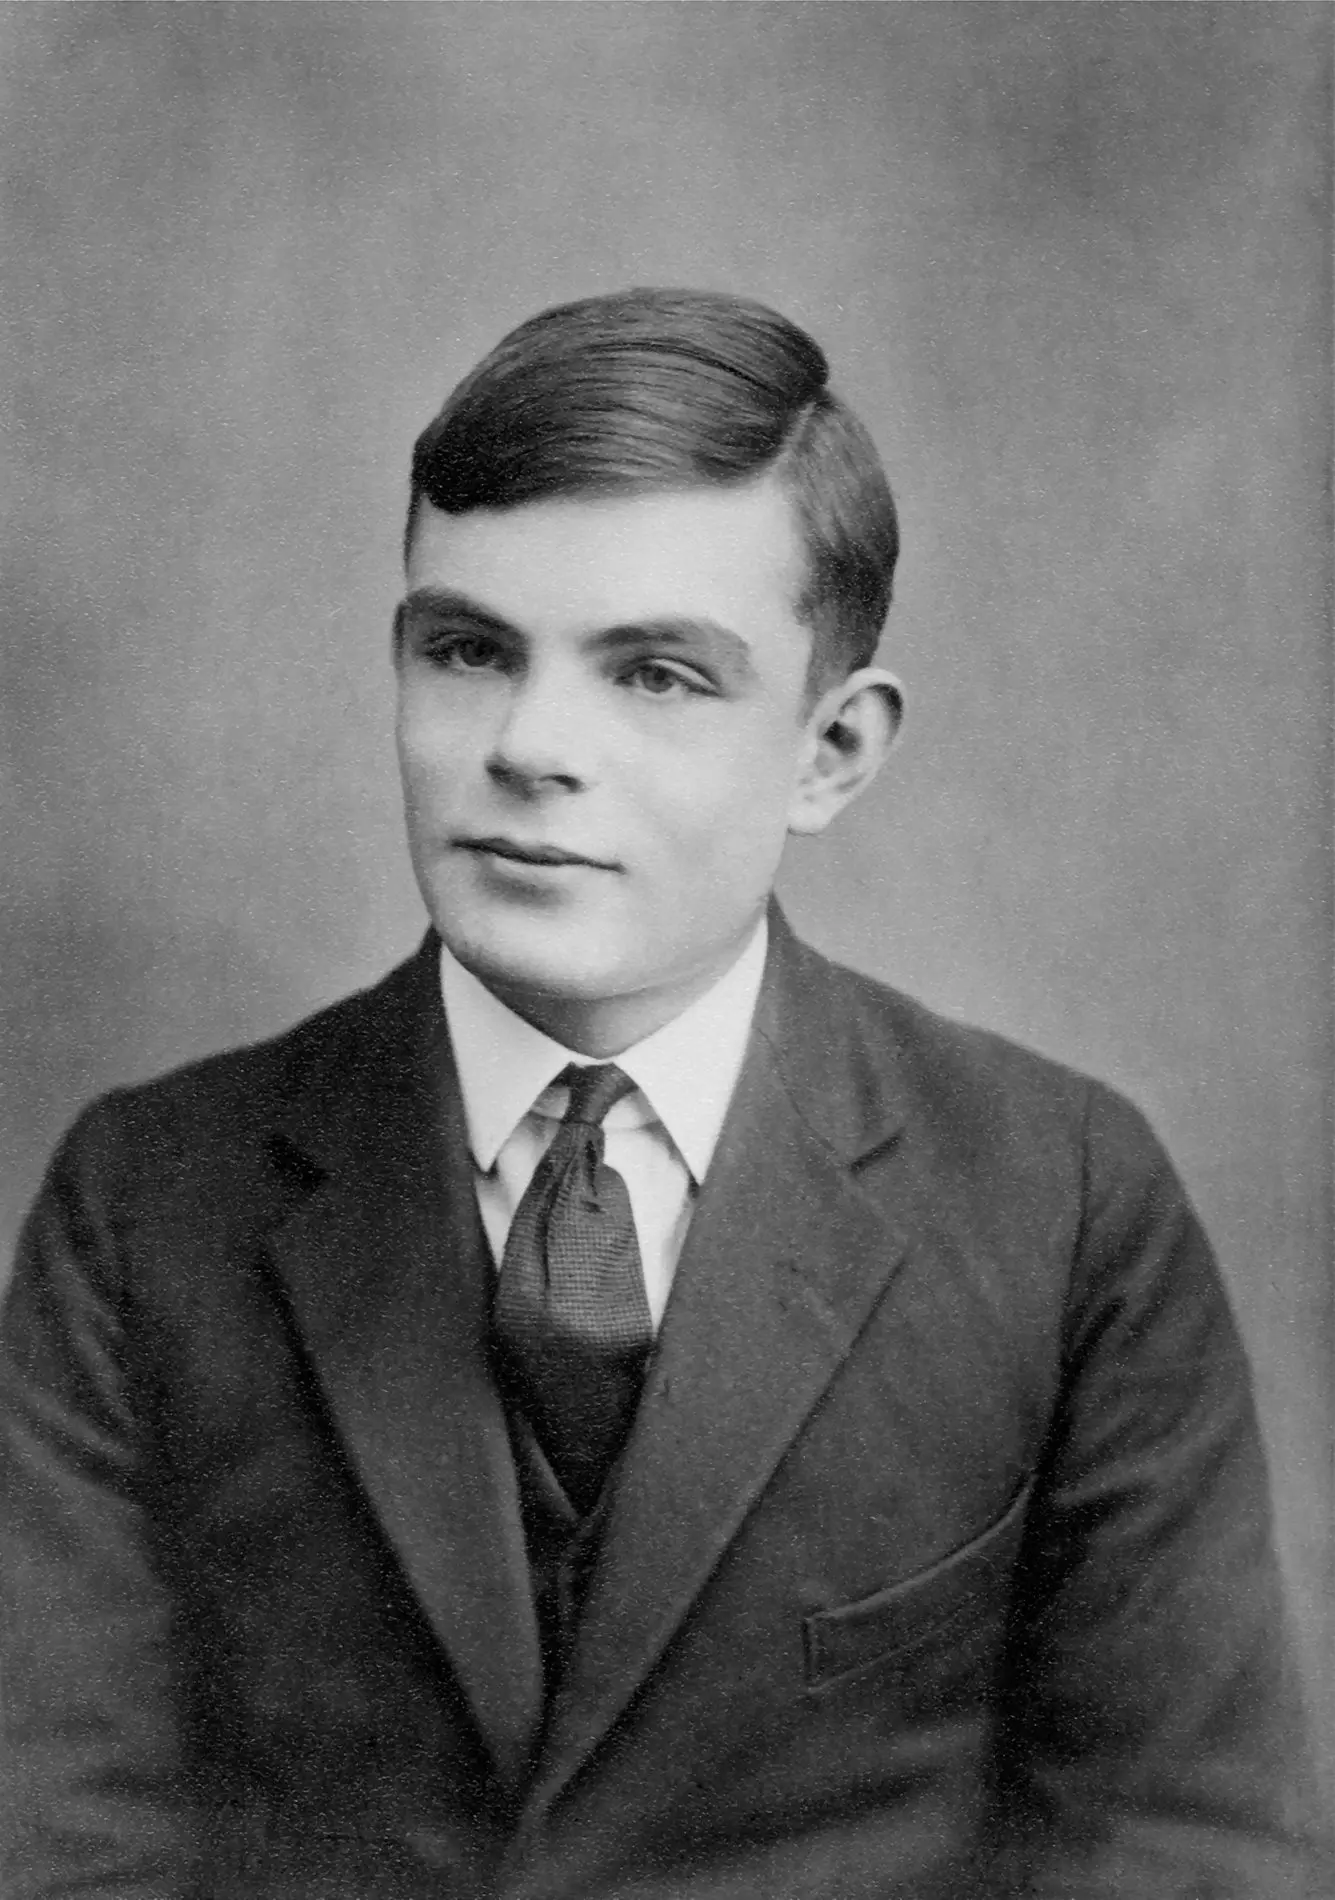 Alan Turing im Portrait